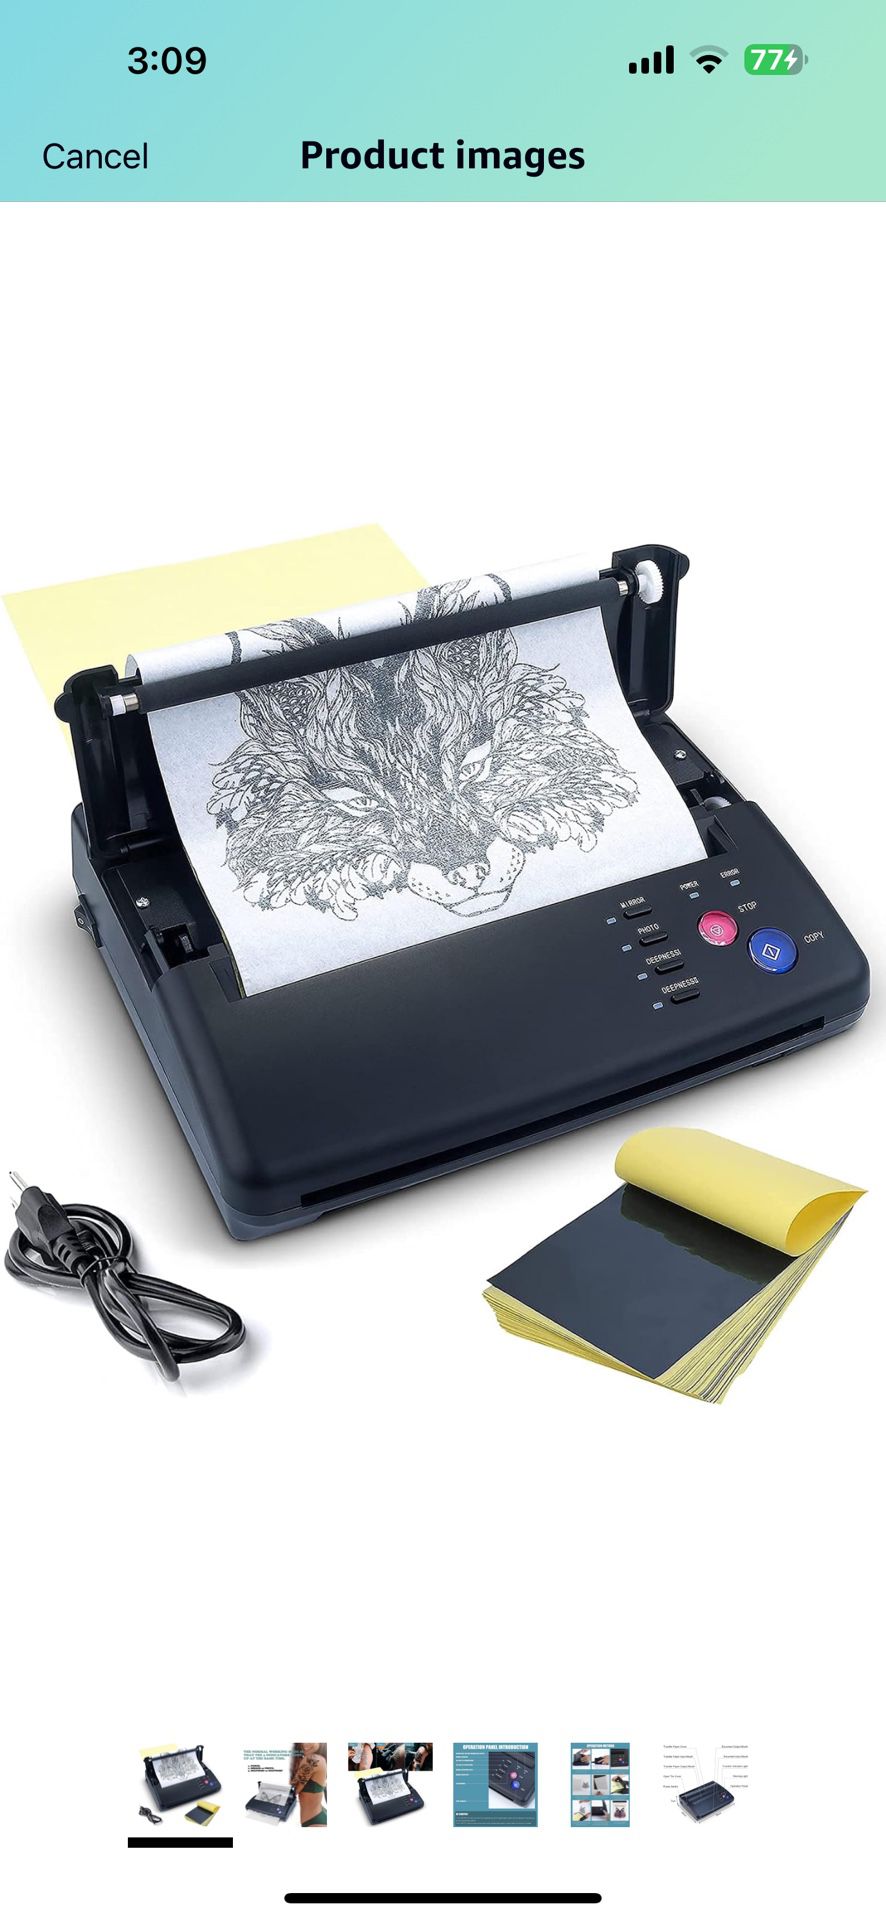 Sacnahe Tattoo Transfer Stencil Machine Copier Printer Thermal Tattoo Kit Copier Printer With 20pcs Free Tattoo Stencil Transfer Paper, Black